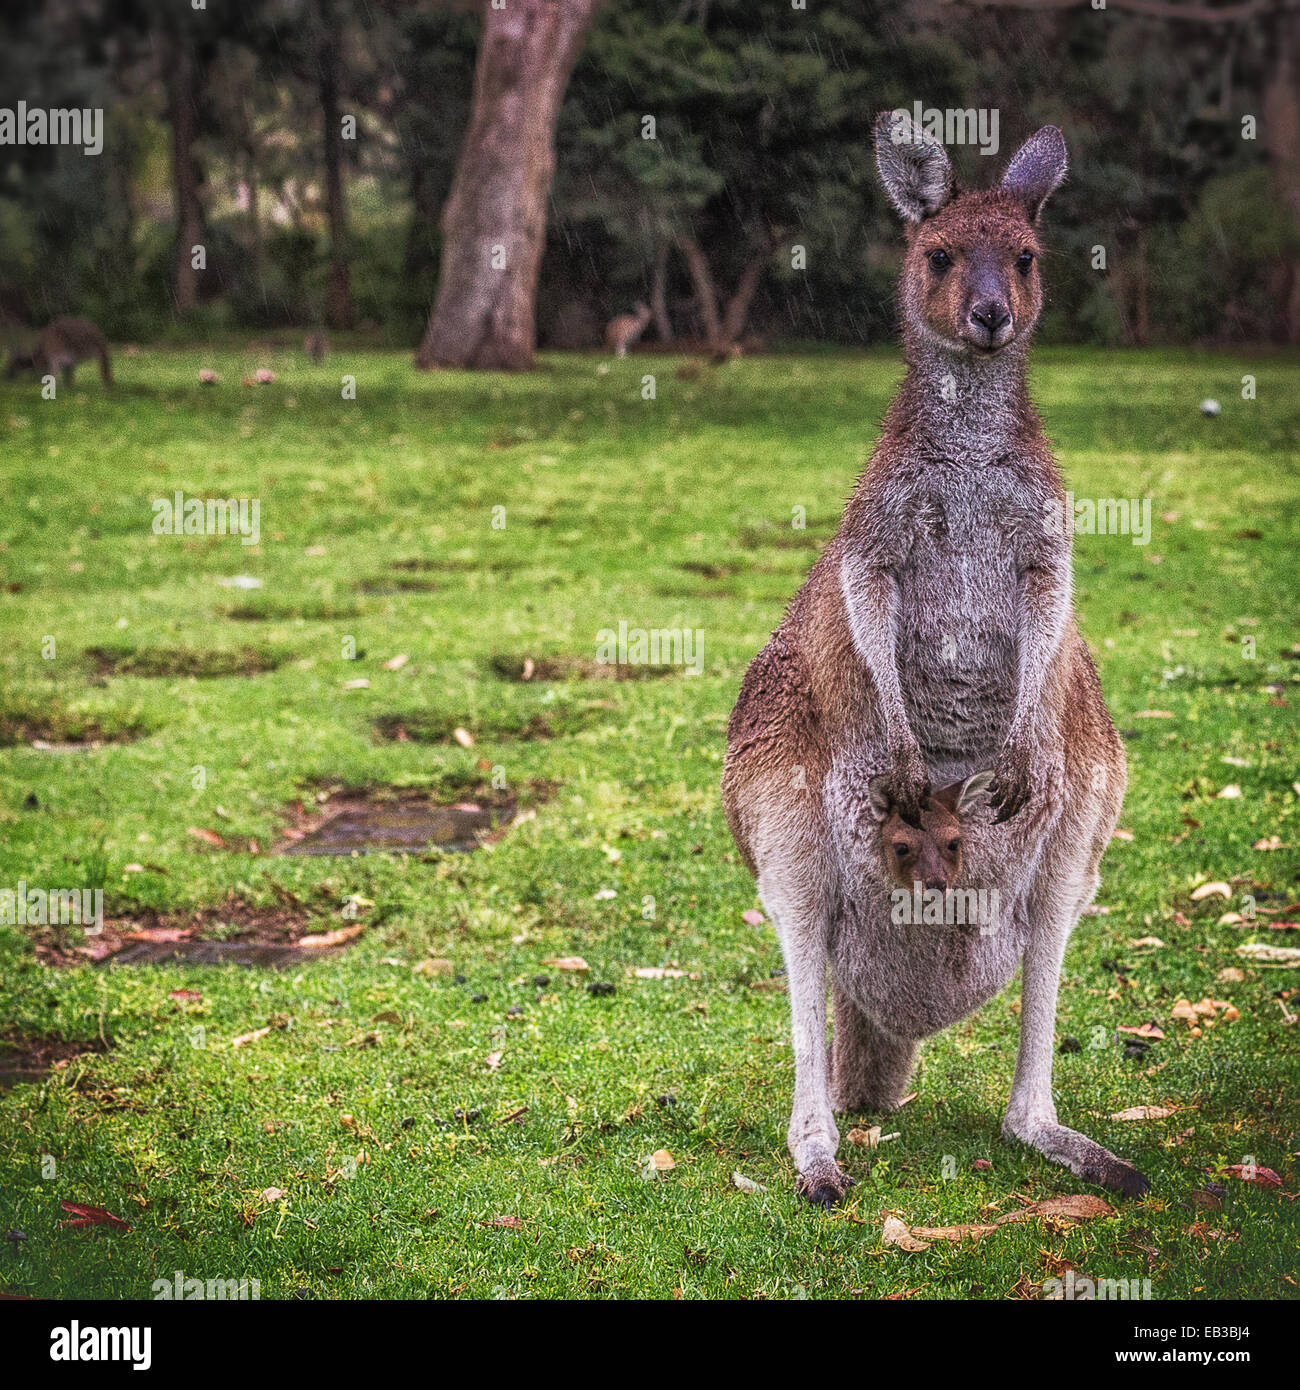 Kangaroo and joey, Australia Stock Photo